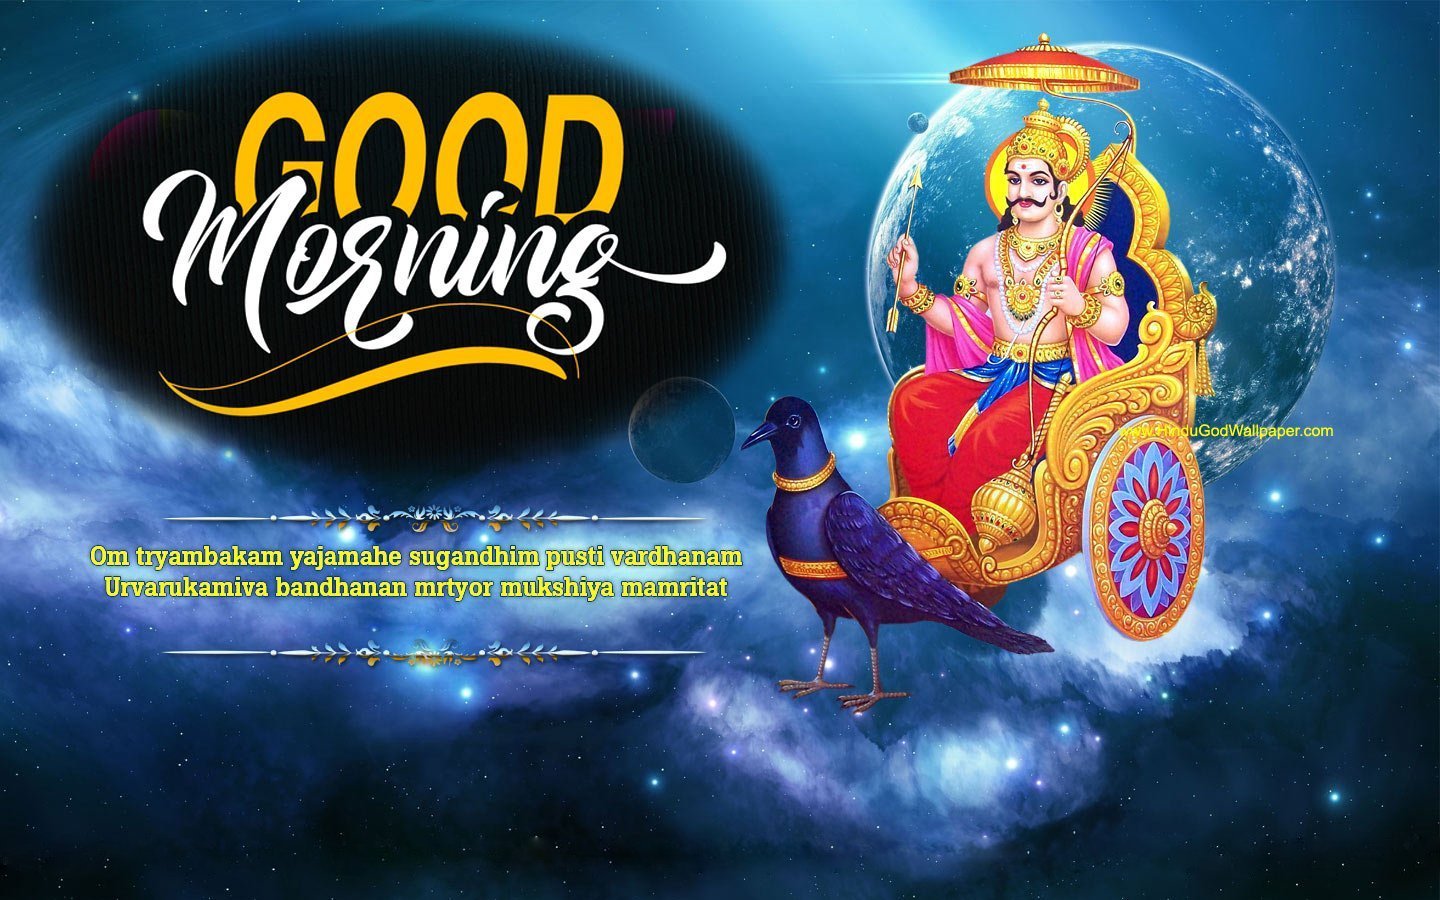 Good Morning Shani Dev Beautiful Shining Image With Mantra